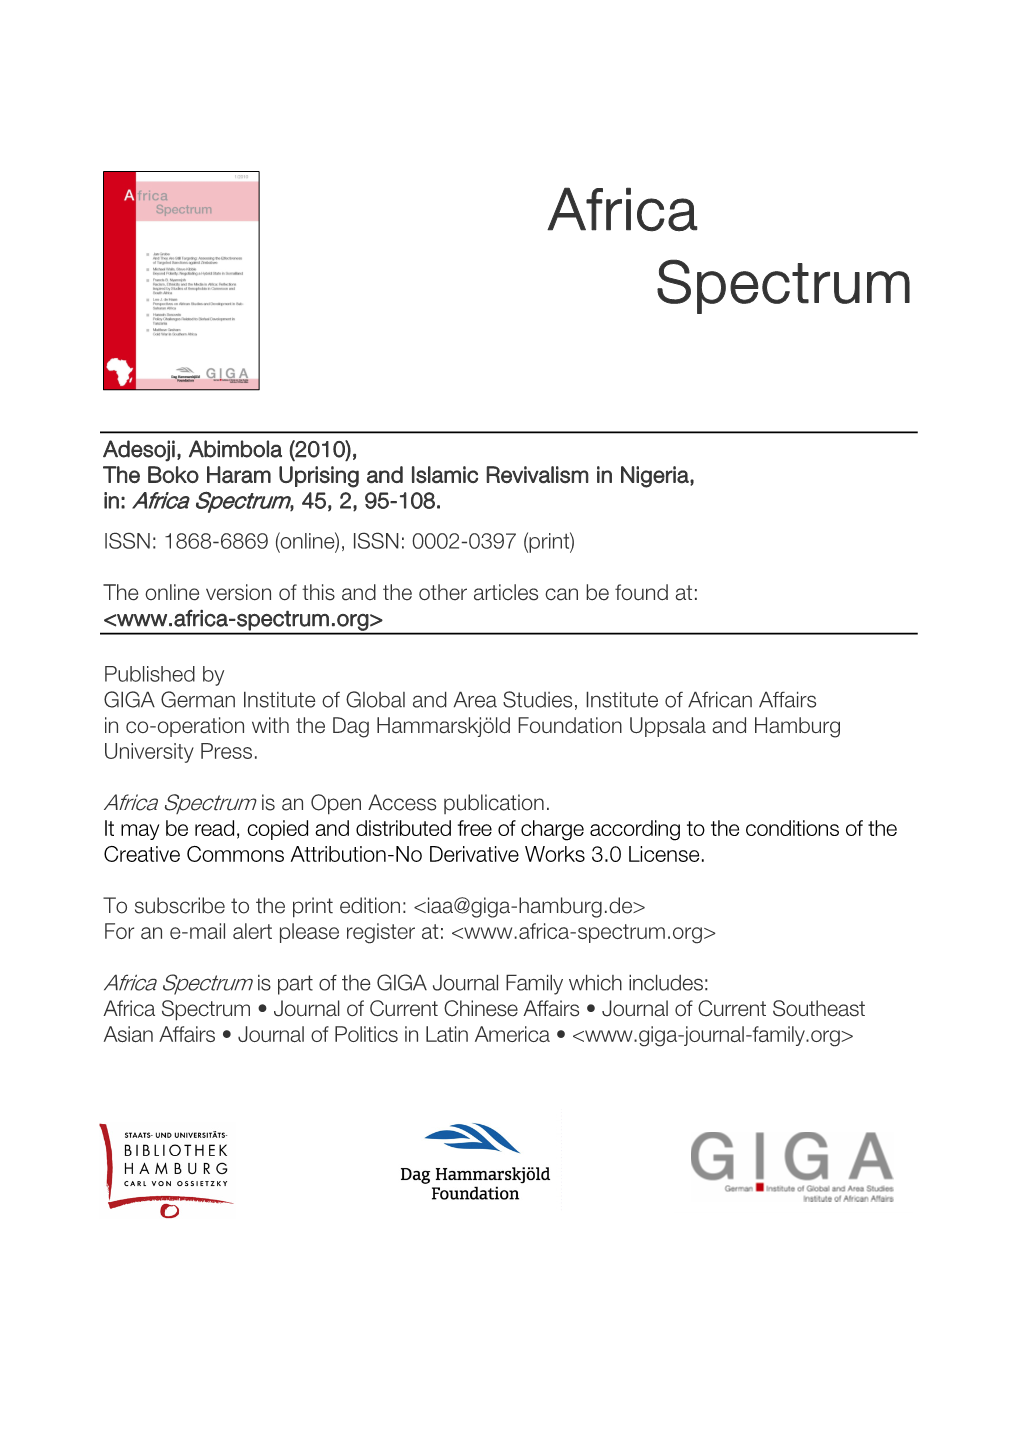 The Boko Haram Uprising and Islamic Revivalism in Nigeria, In: Africa Spectrum, 45, 2, 95-108